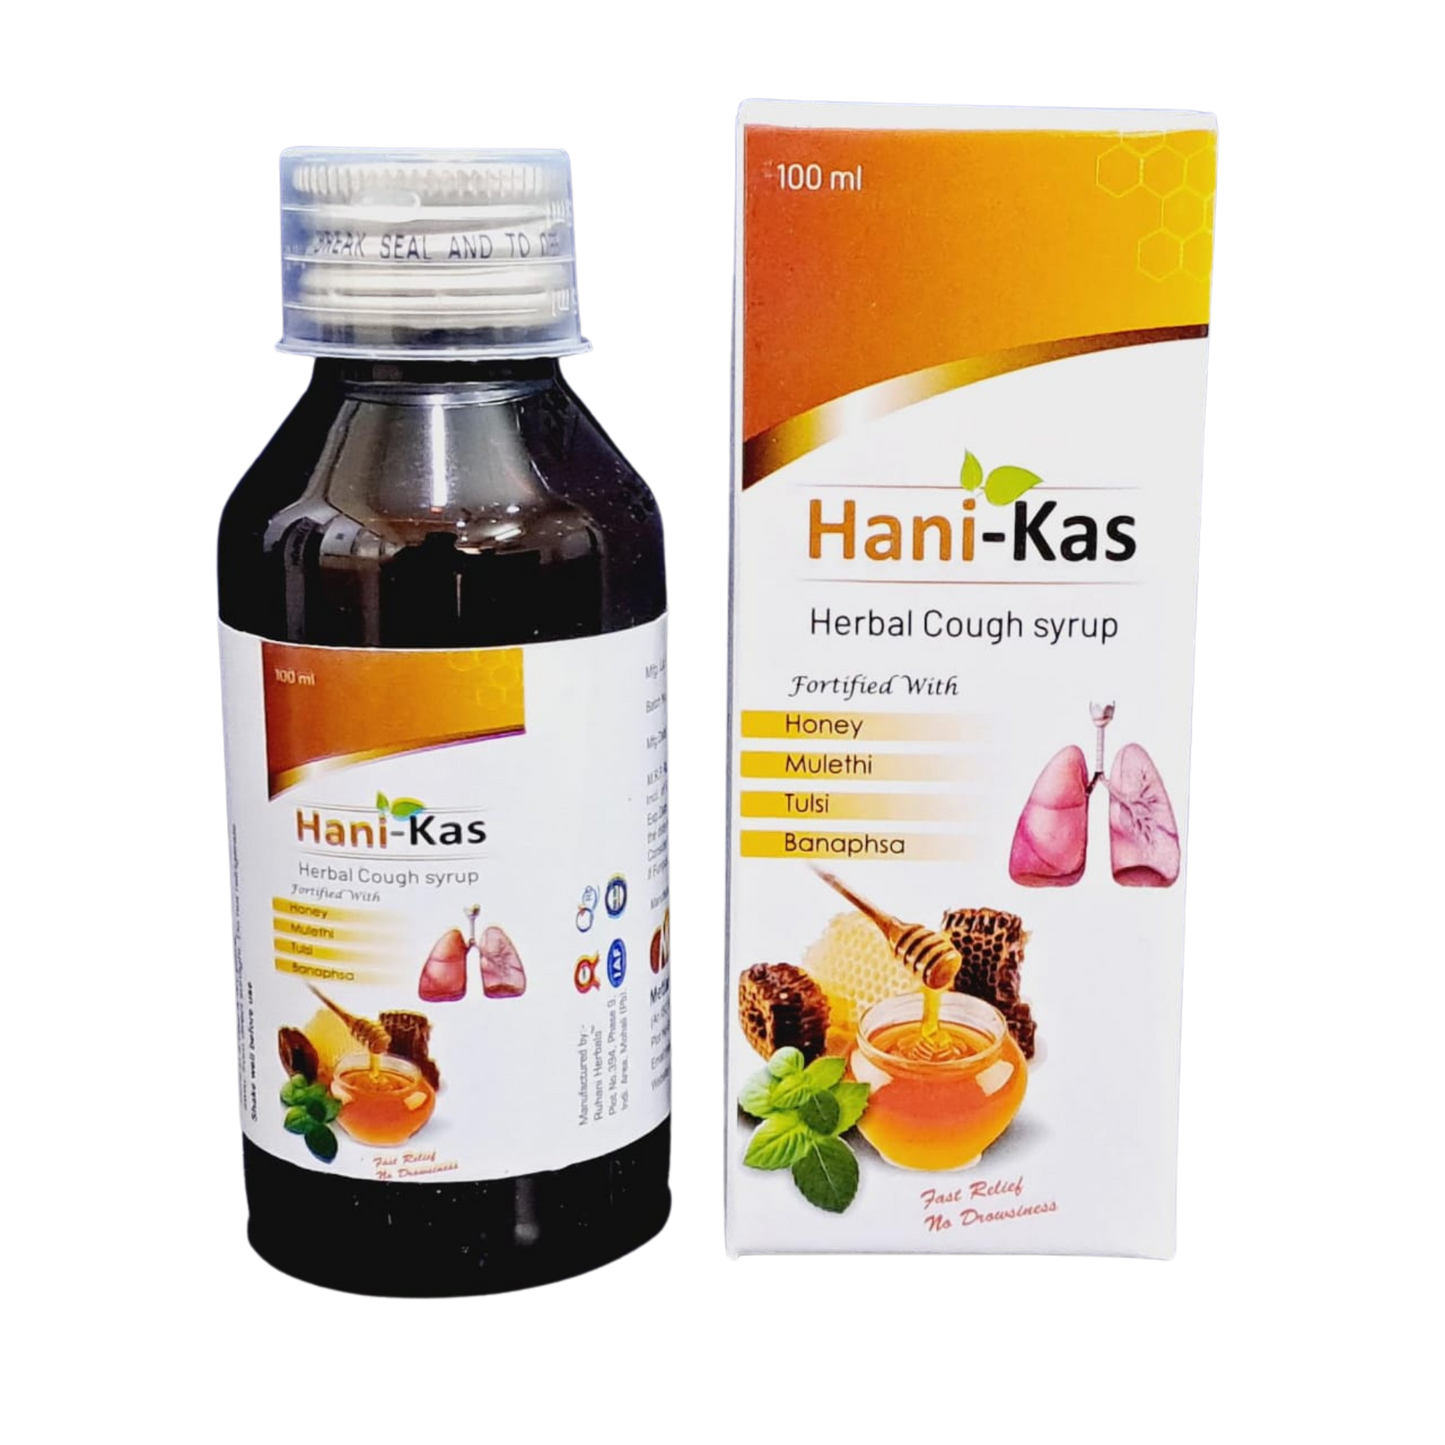 Dharavati Herbs Hani-kas Syrup | Herbal Cough and Cold Tonic | Sugar Free Syrup | Hani-kas Herbal Tonic- 100ml